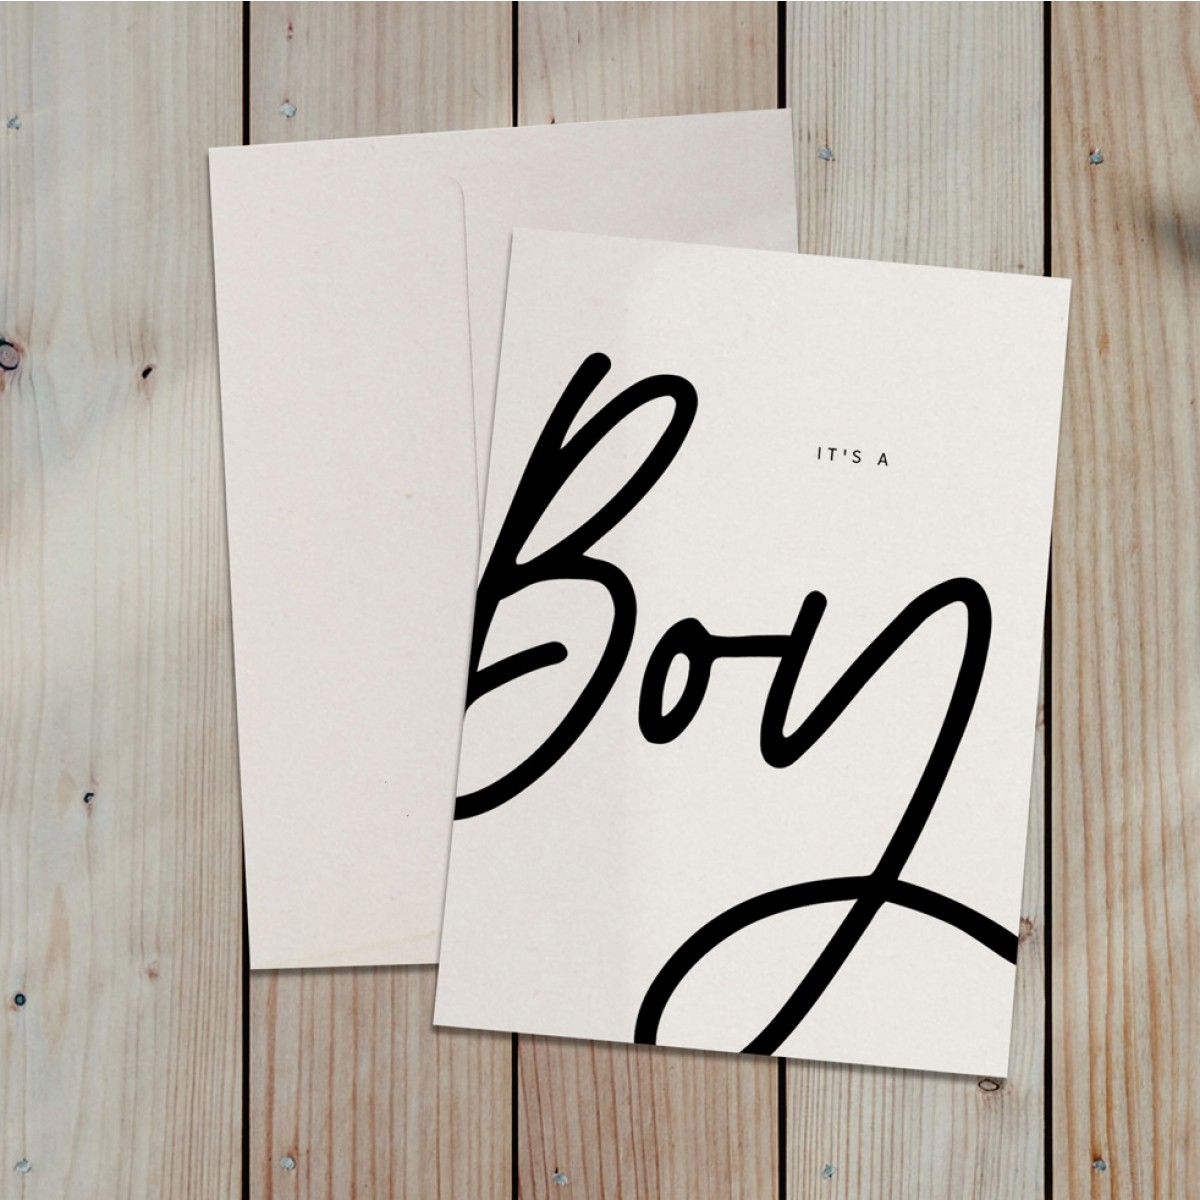 Love is the new black – Grußkarte "Boy"